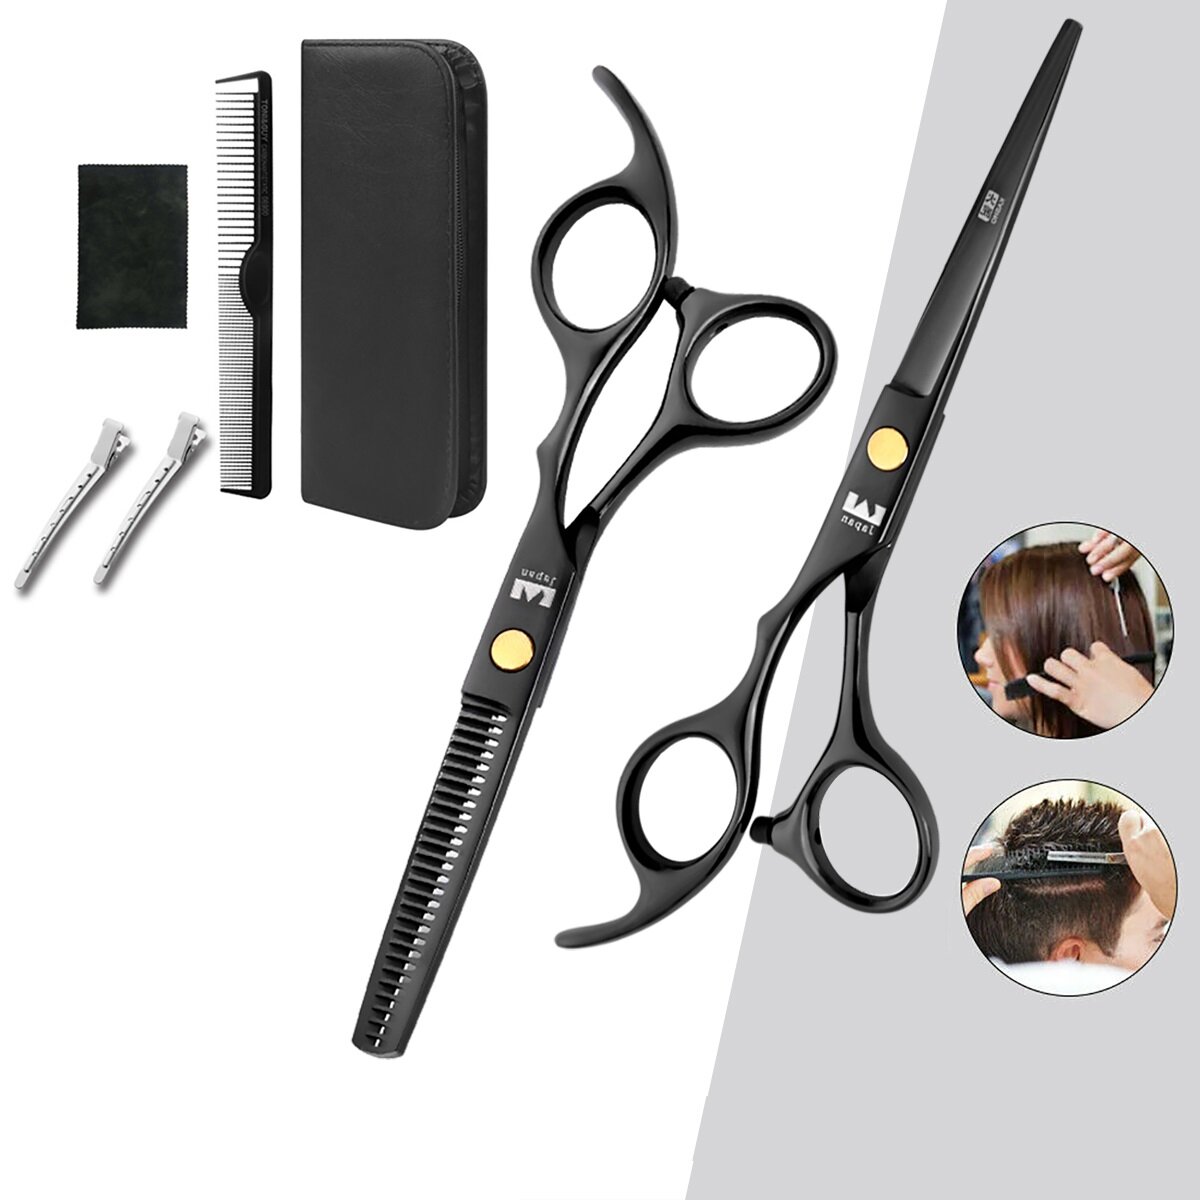 

Professional Hair Cutting Thinning Scissors Barber Shears Hairdressing Salon Set